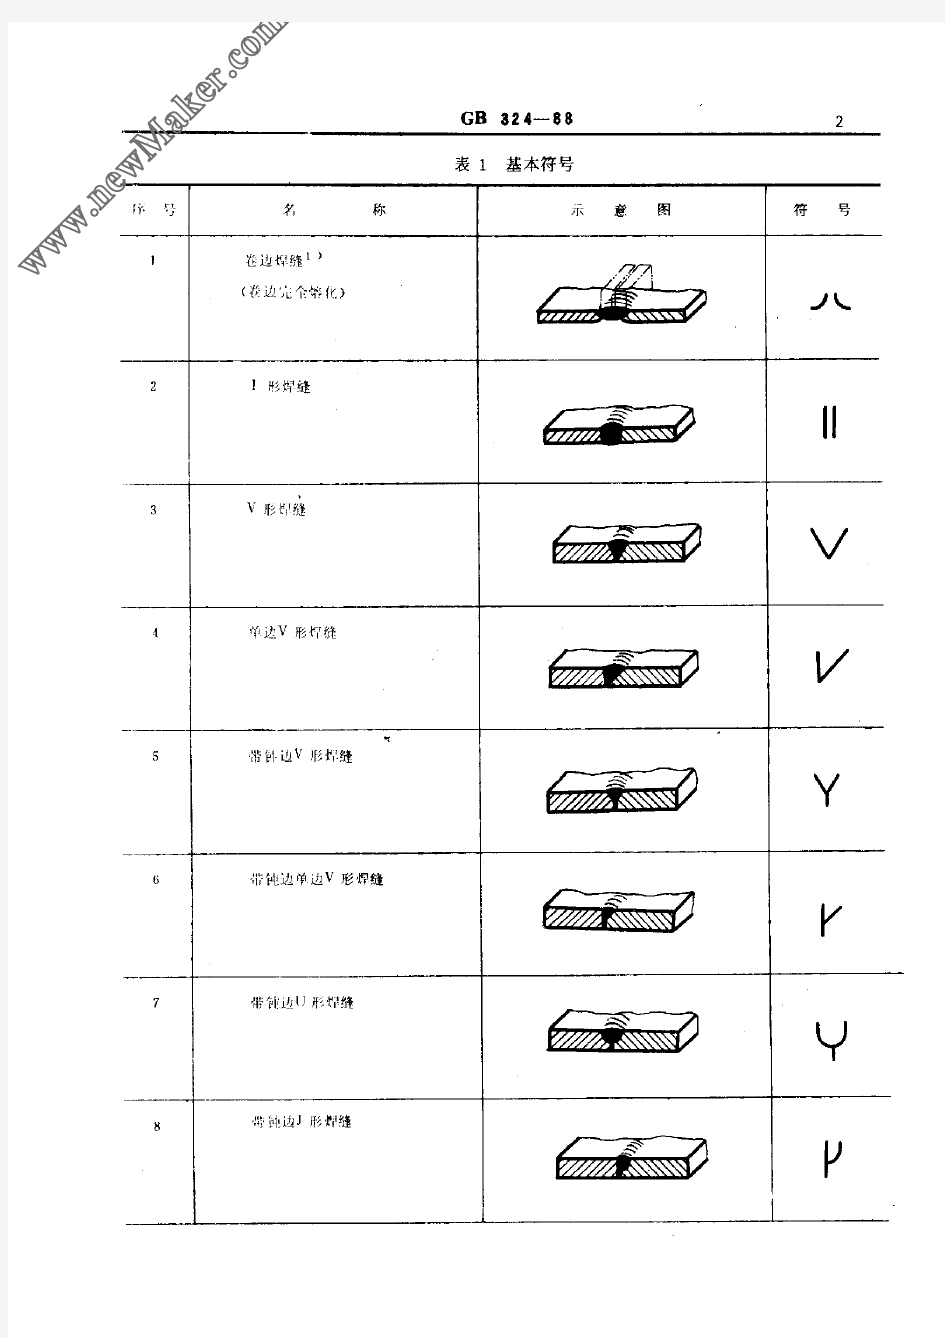 GB324-88焊缝符号表示法